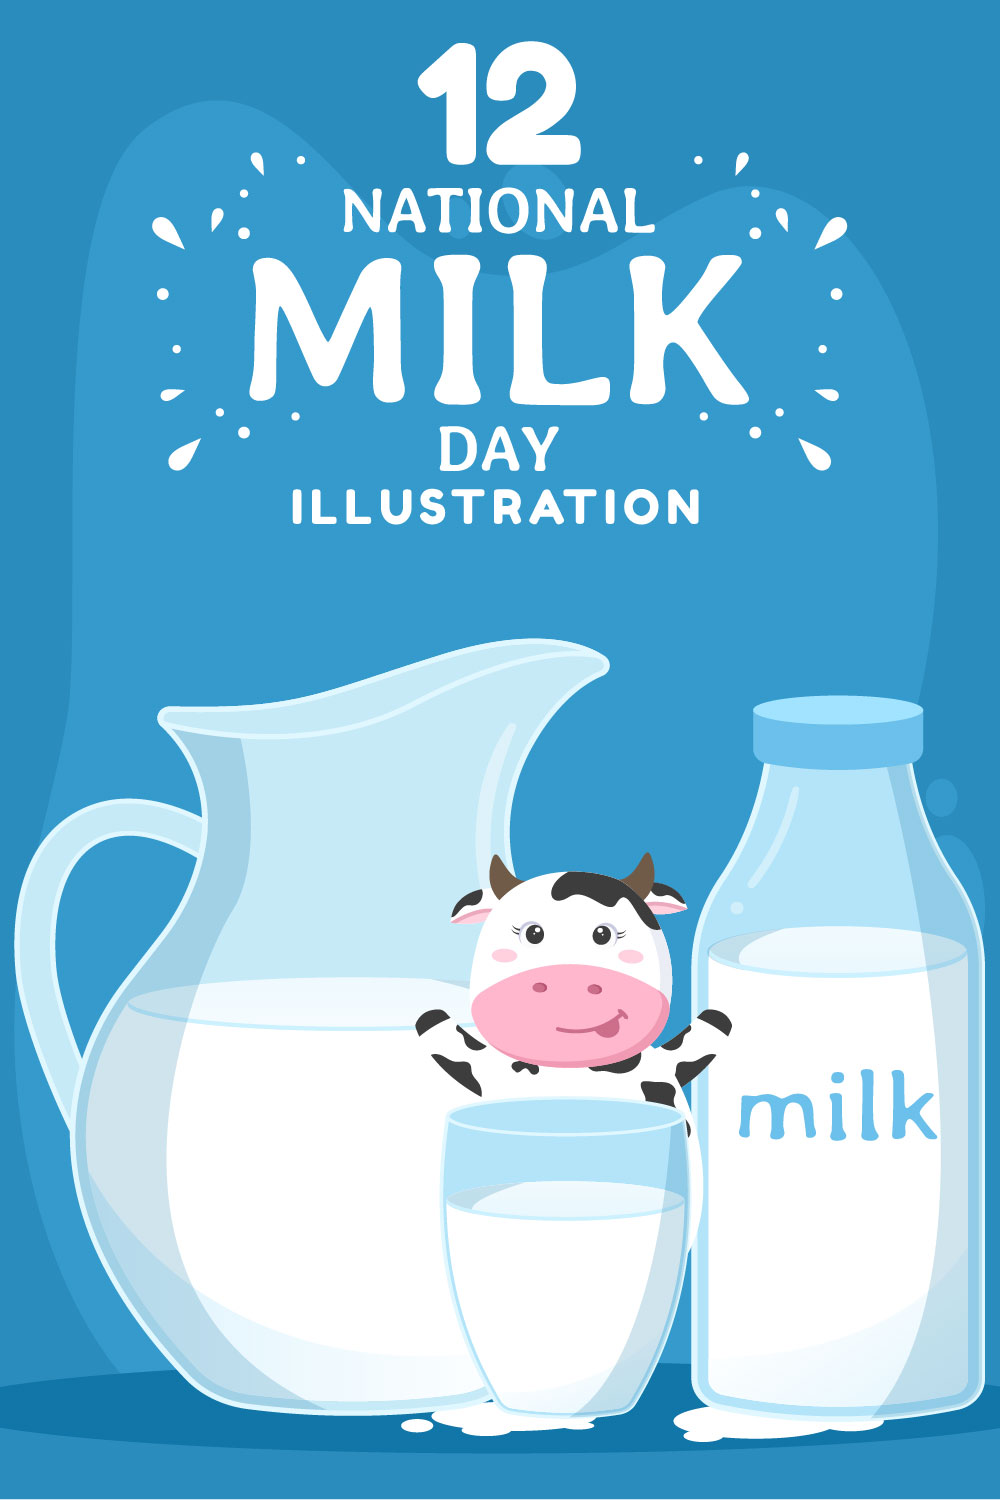 Happy Milk Day Illustration pinterest image.